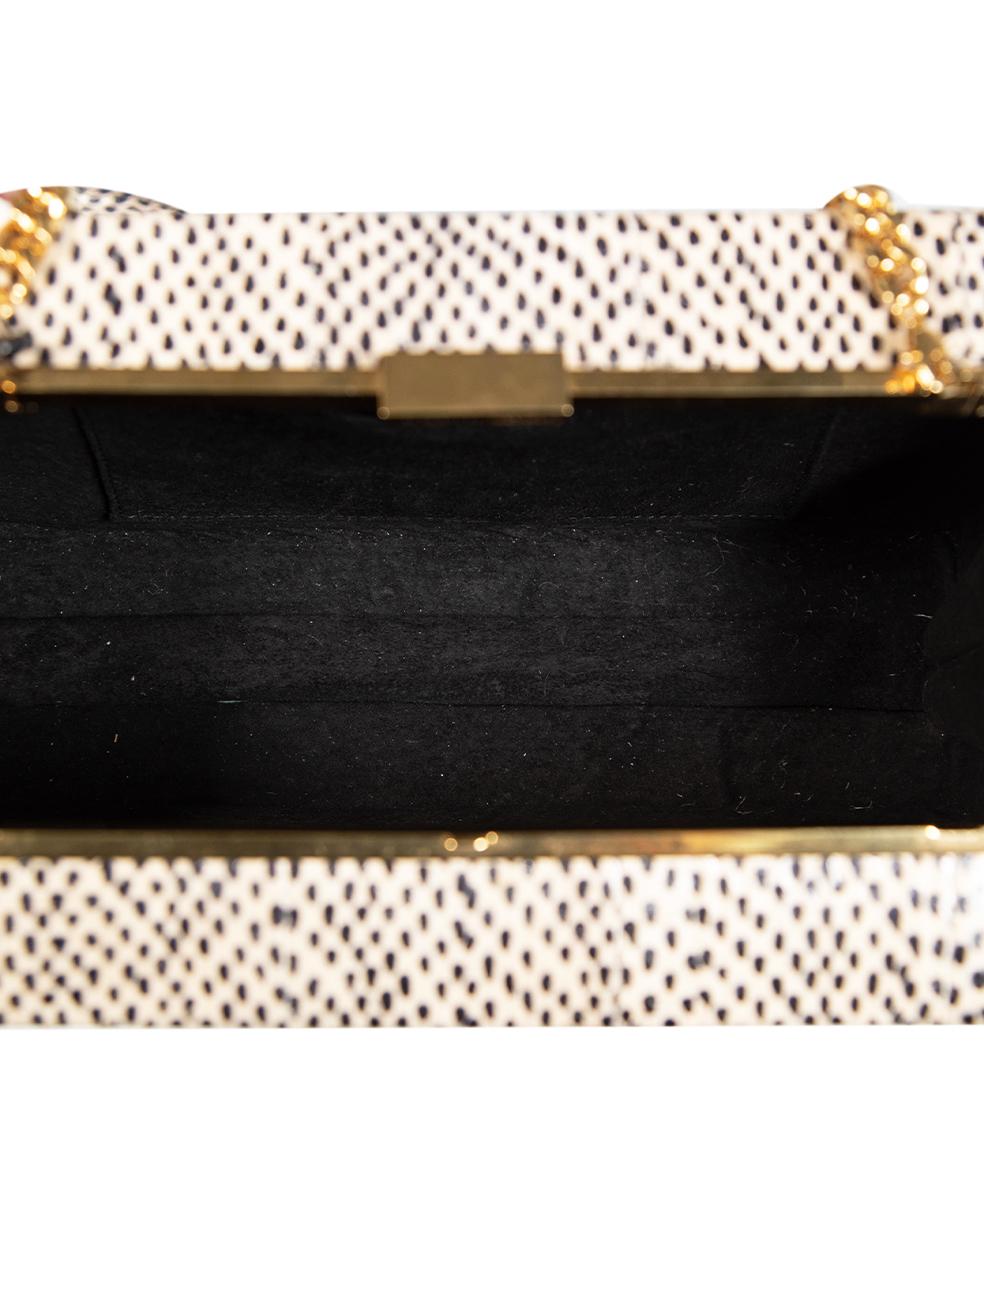 Alexander McQueen Python Gold Hardware Box Clutch on Chain For Sale 1